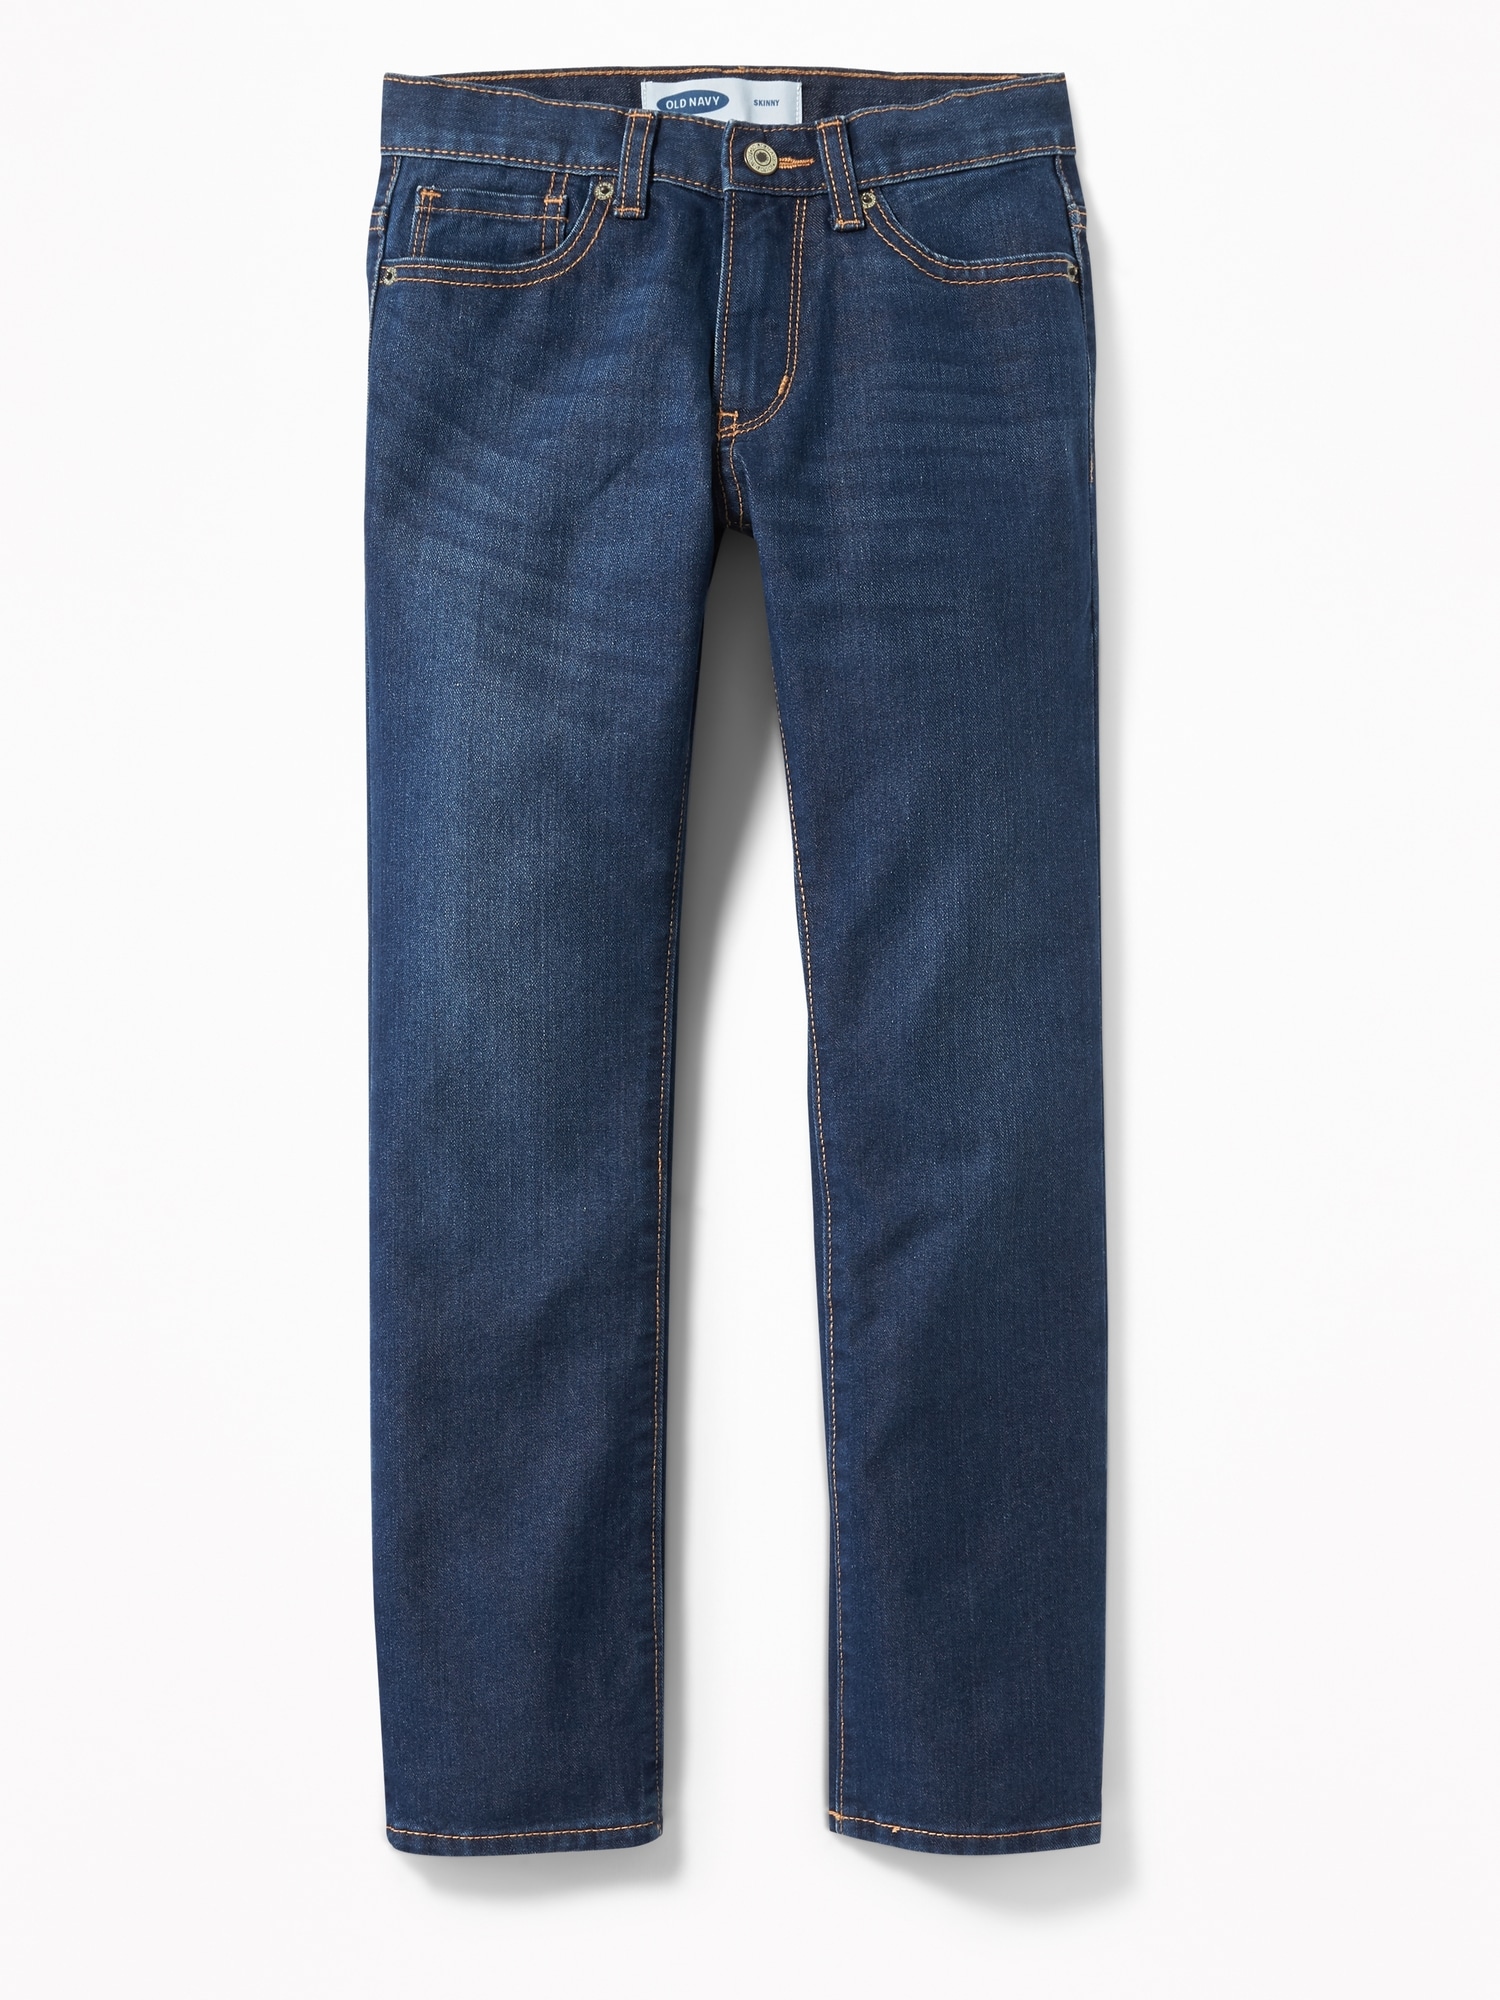 old navy elastic waist jeans